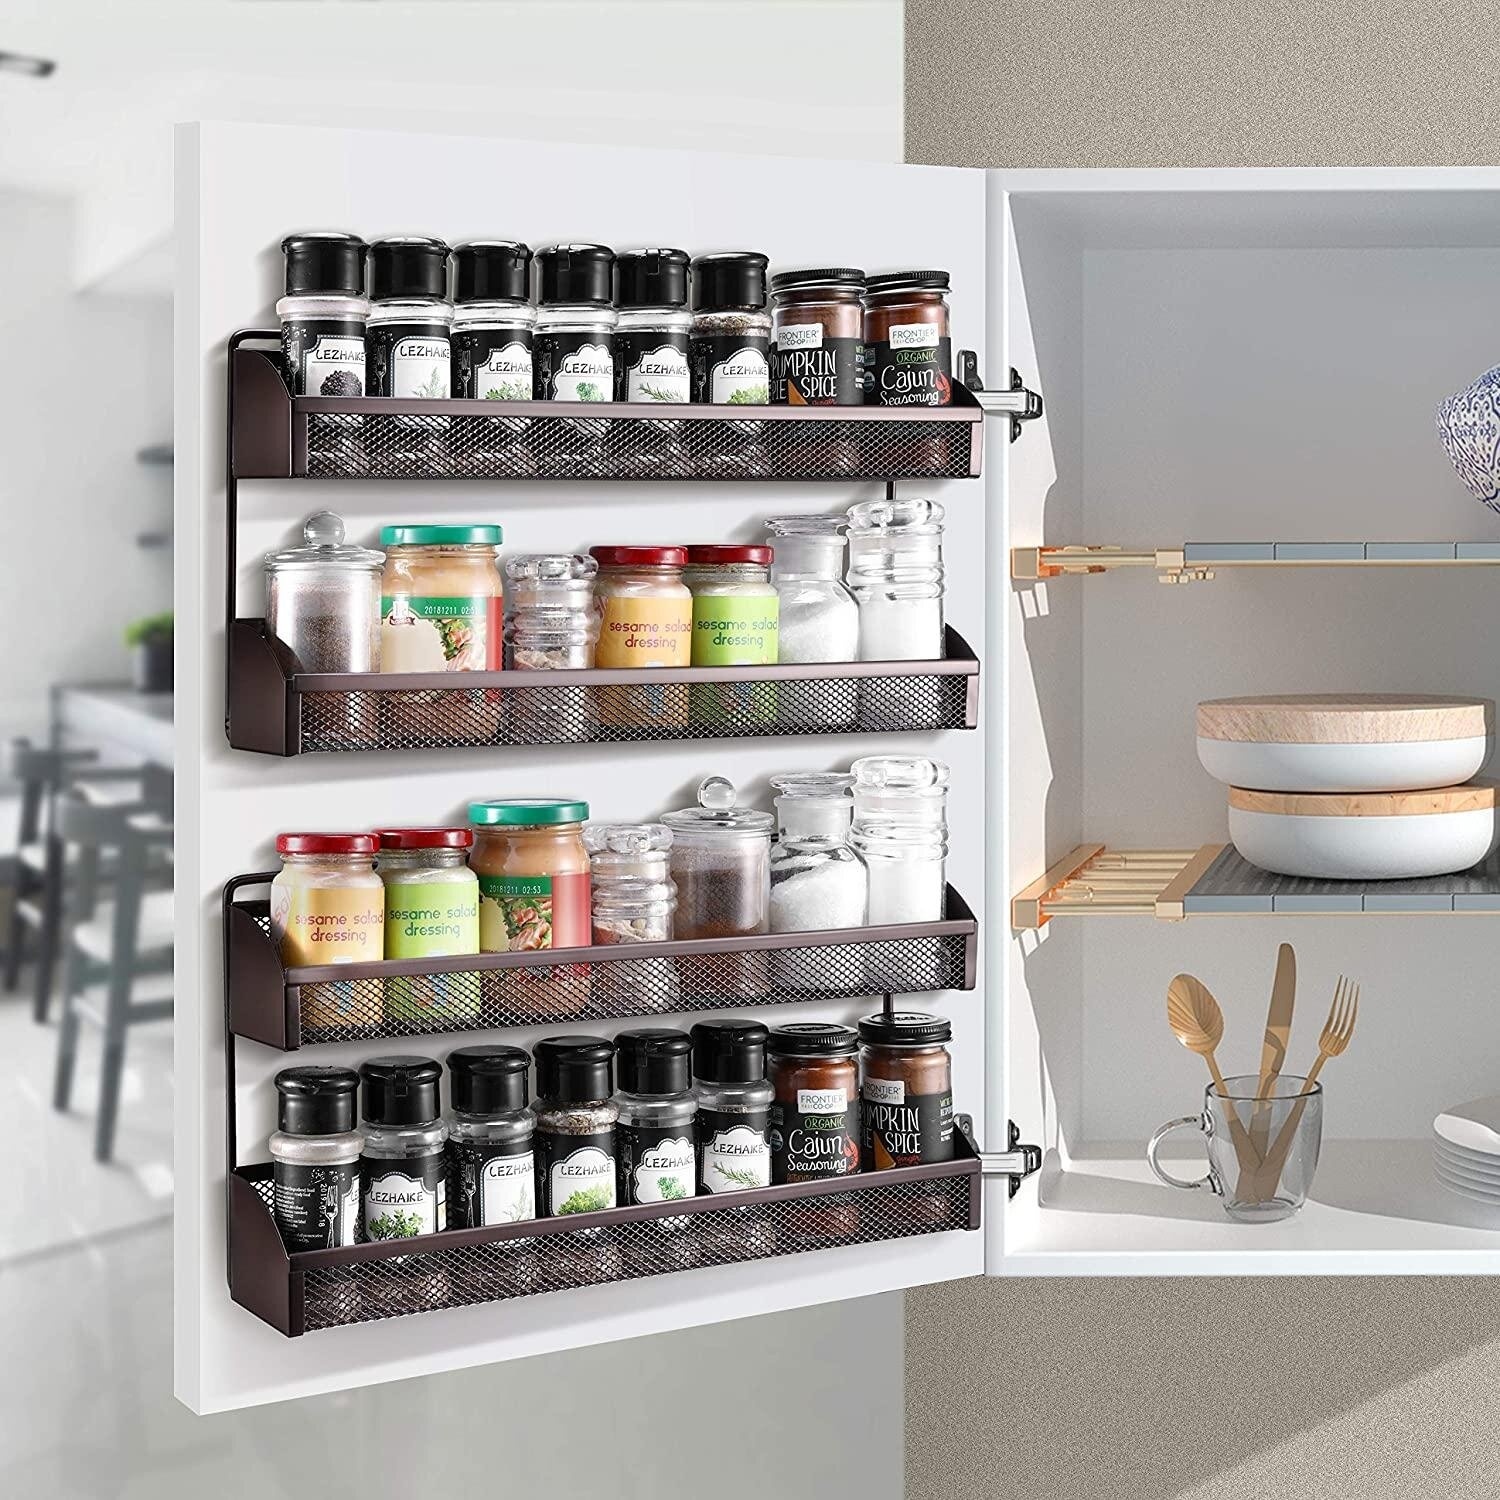 2 Pack- Simple Trending Cabinet Shelf Organizer, Kitchen Counter Shelf